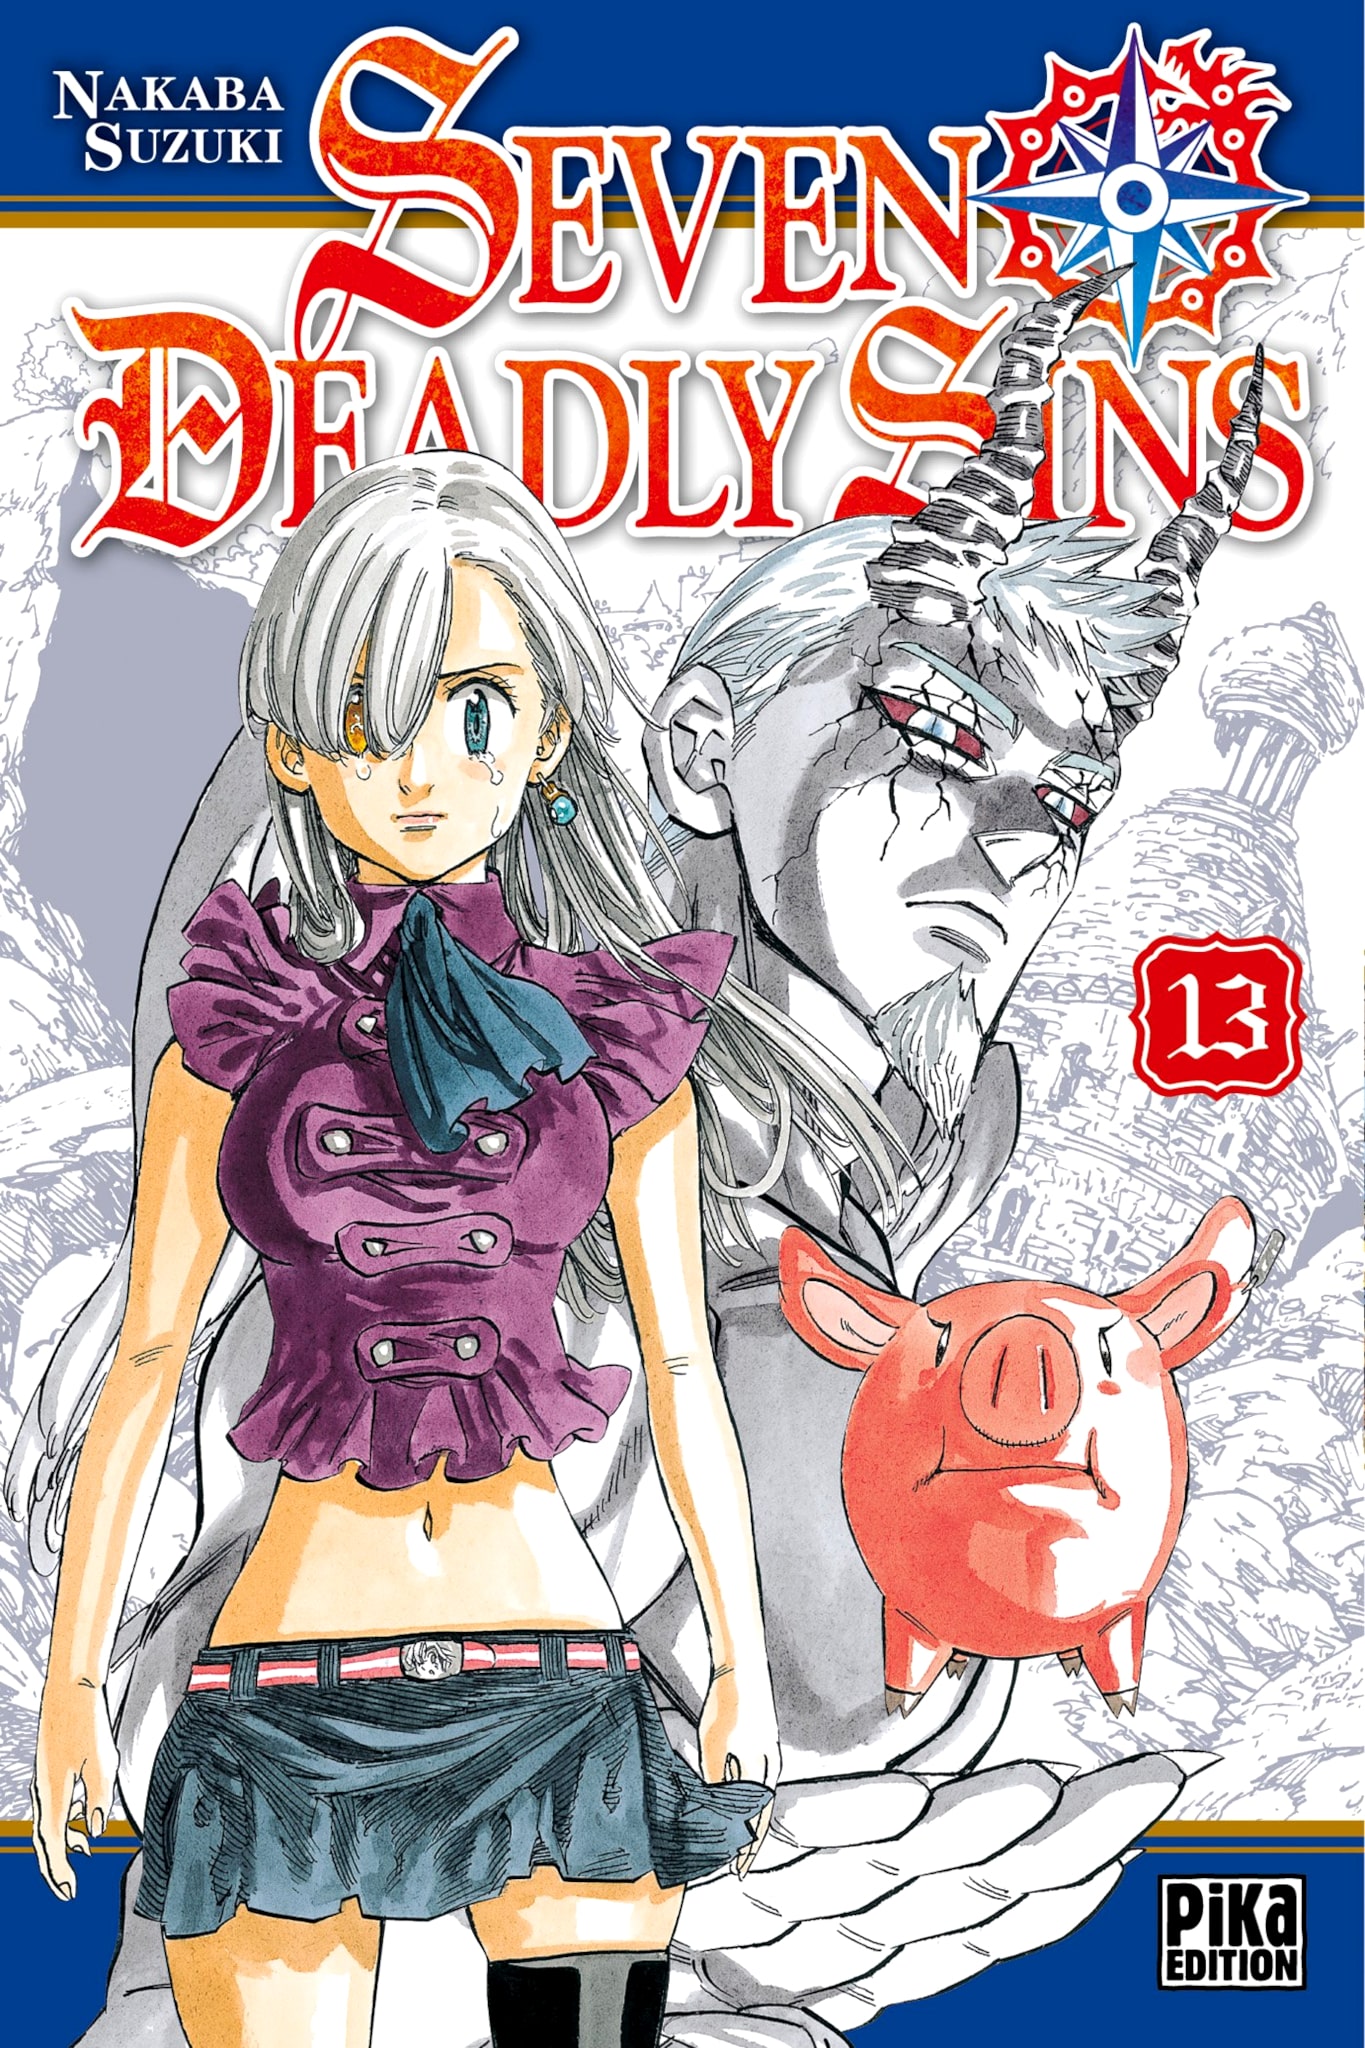 Tome 13 du manga The Seven Deadly Sins